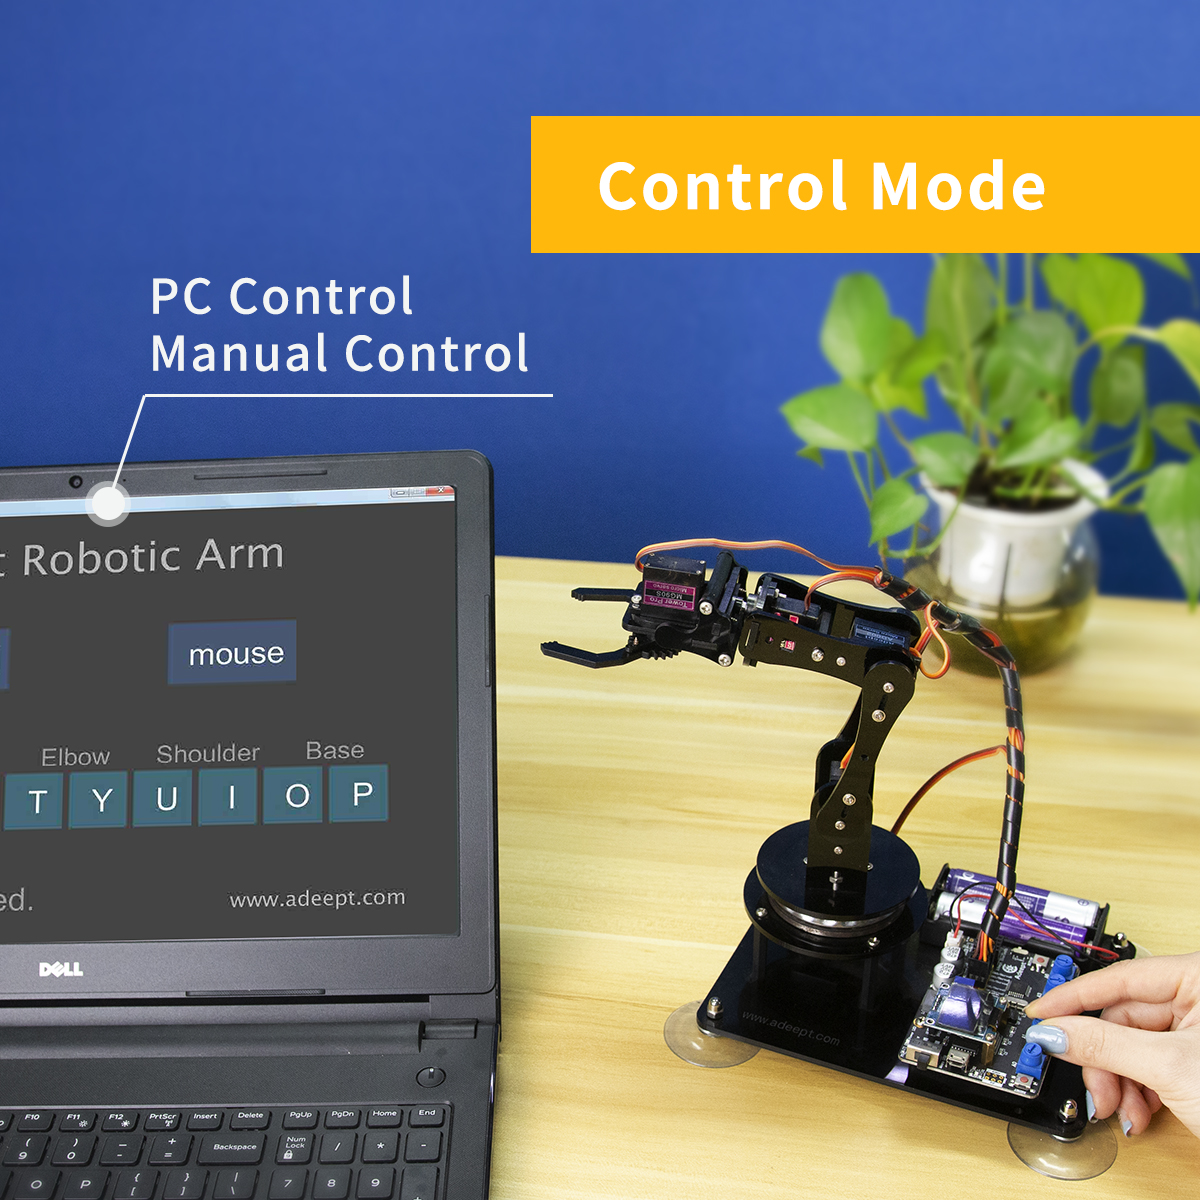 Adeept 5-DOF STEAM  DIY Robot Arm Robotic Arm Kit for UNO R3 with Arduinoo Processing Code